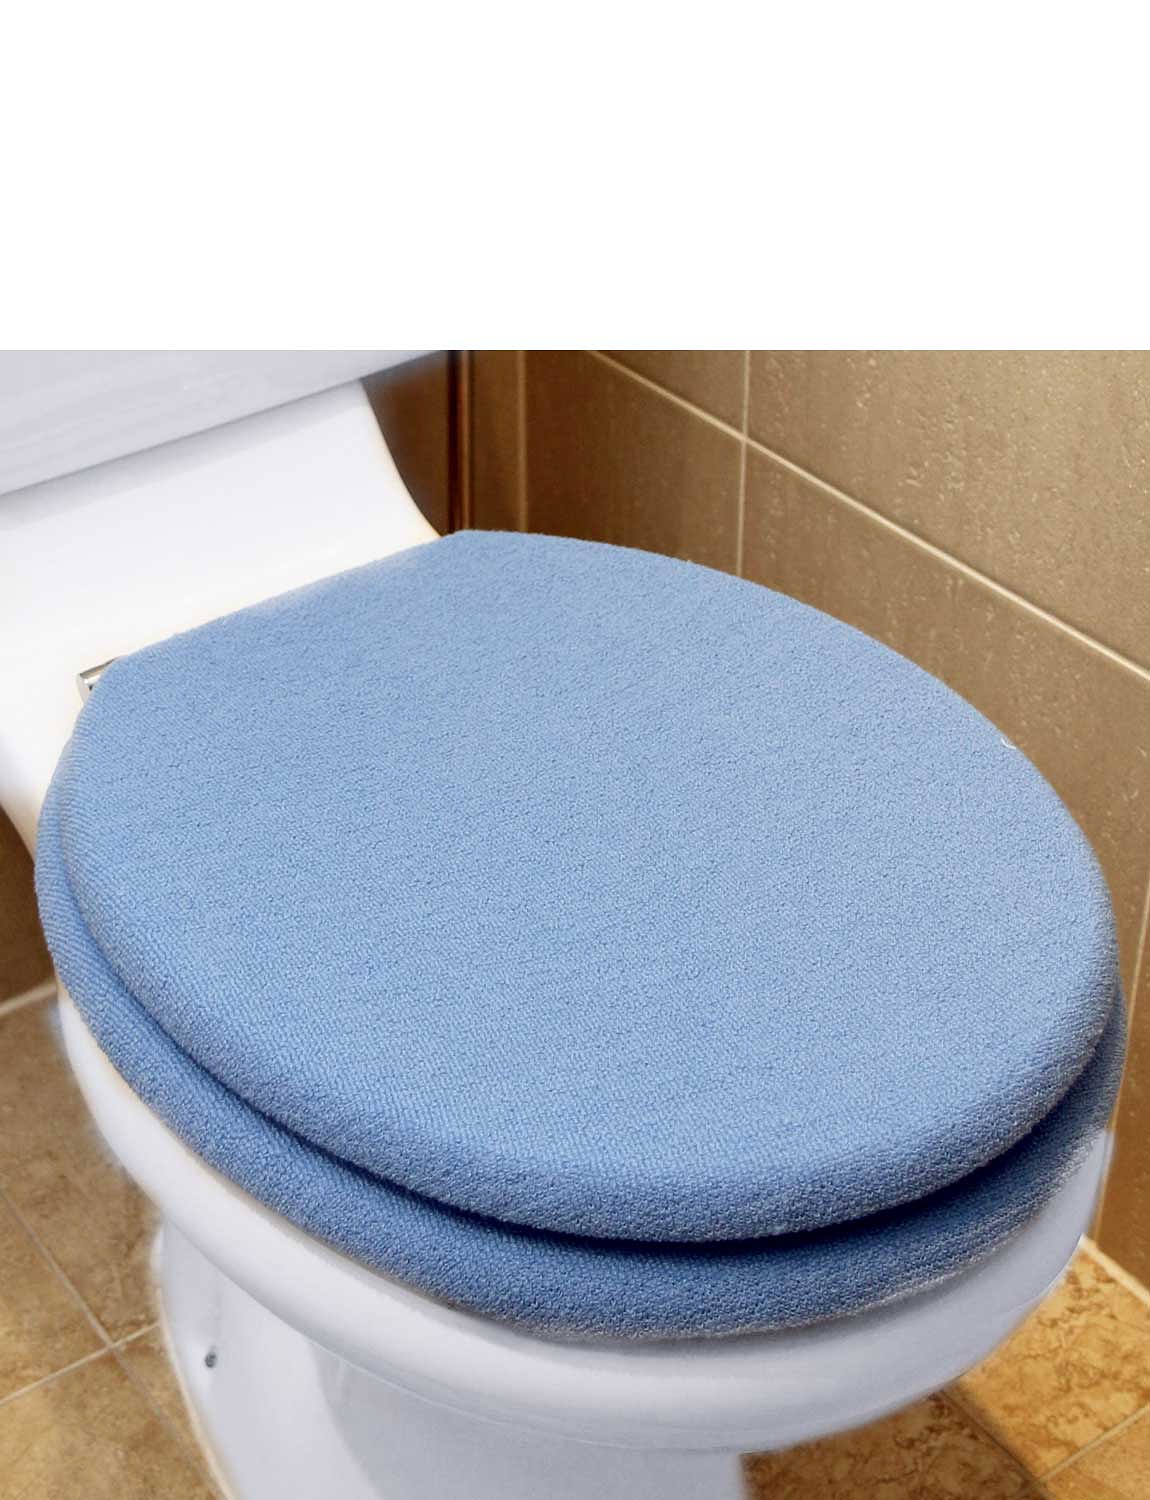 toilet cover